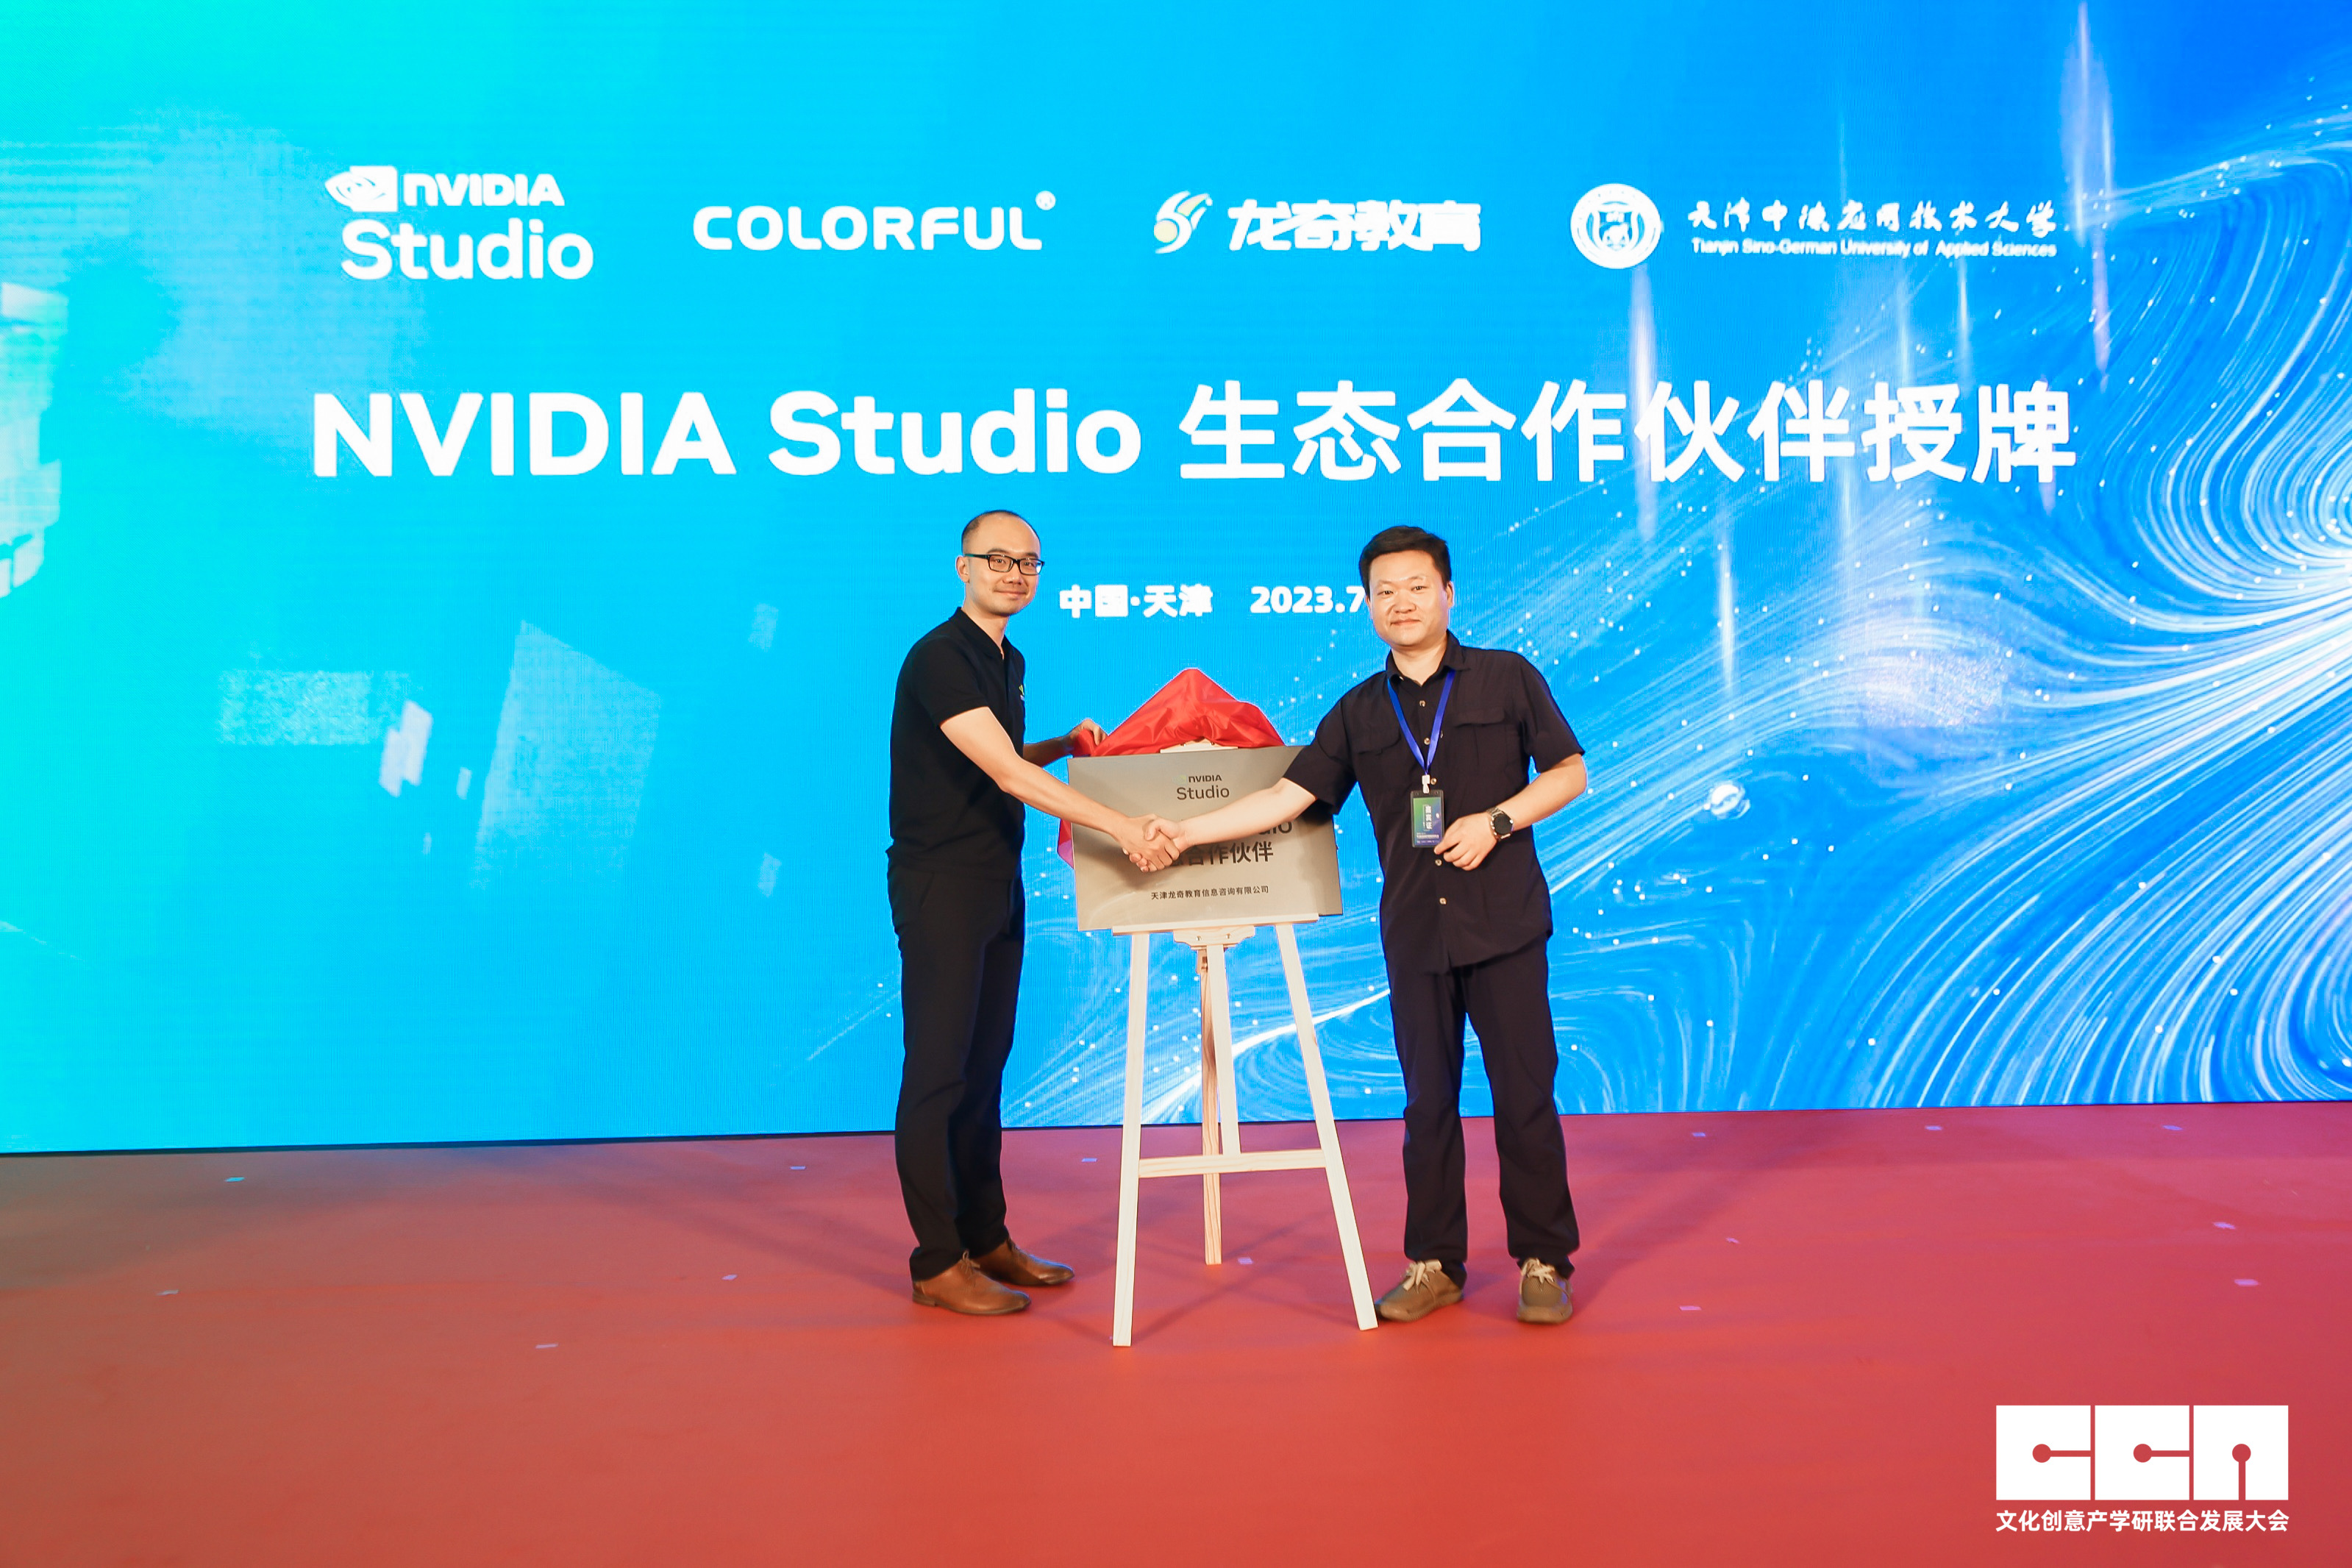 NVIDIA Studio携手七彩虹亮相产学研大会，助力创意技术创新与人才培养-中南文化网